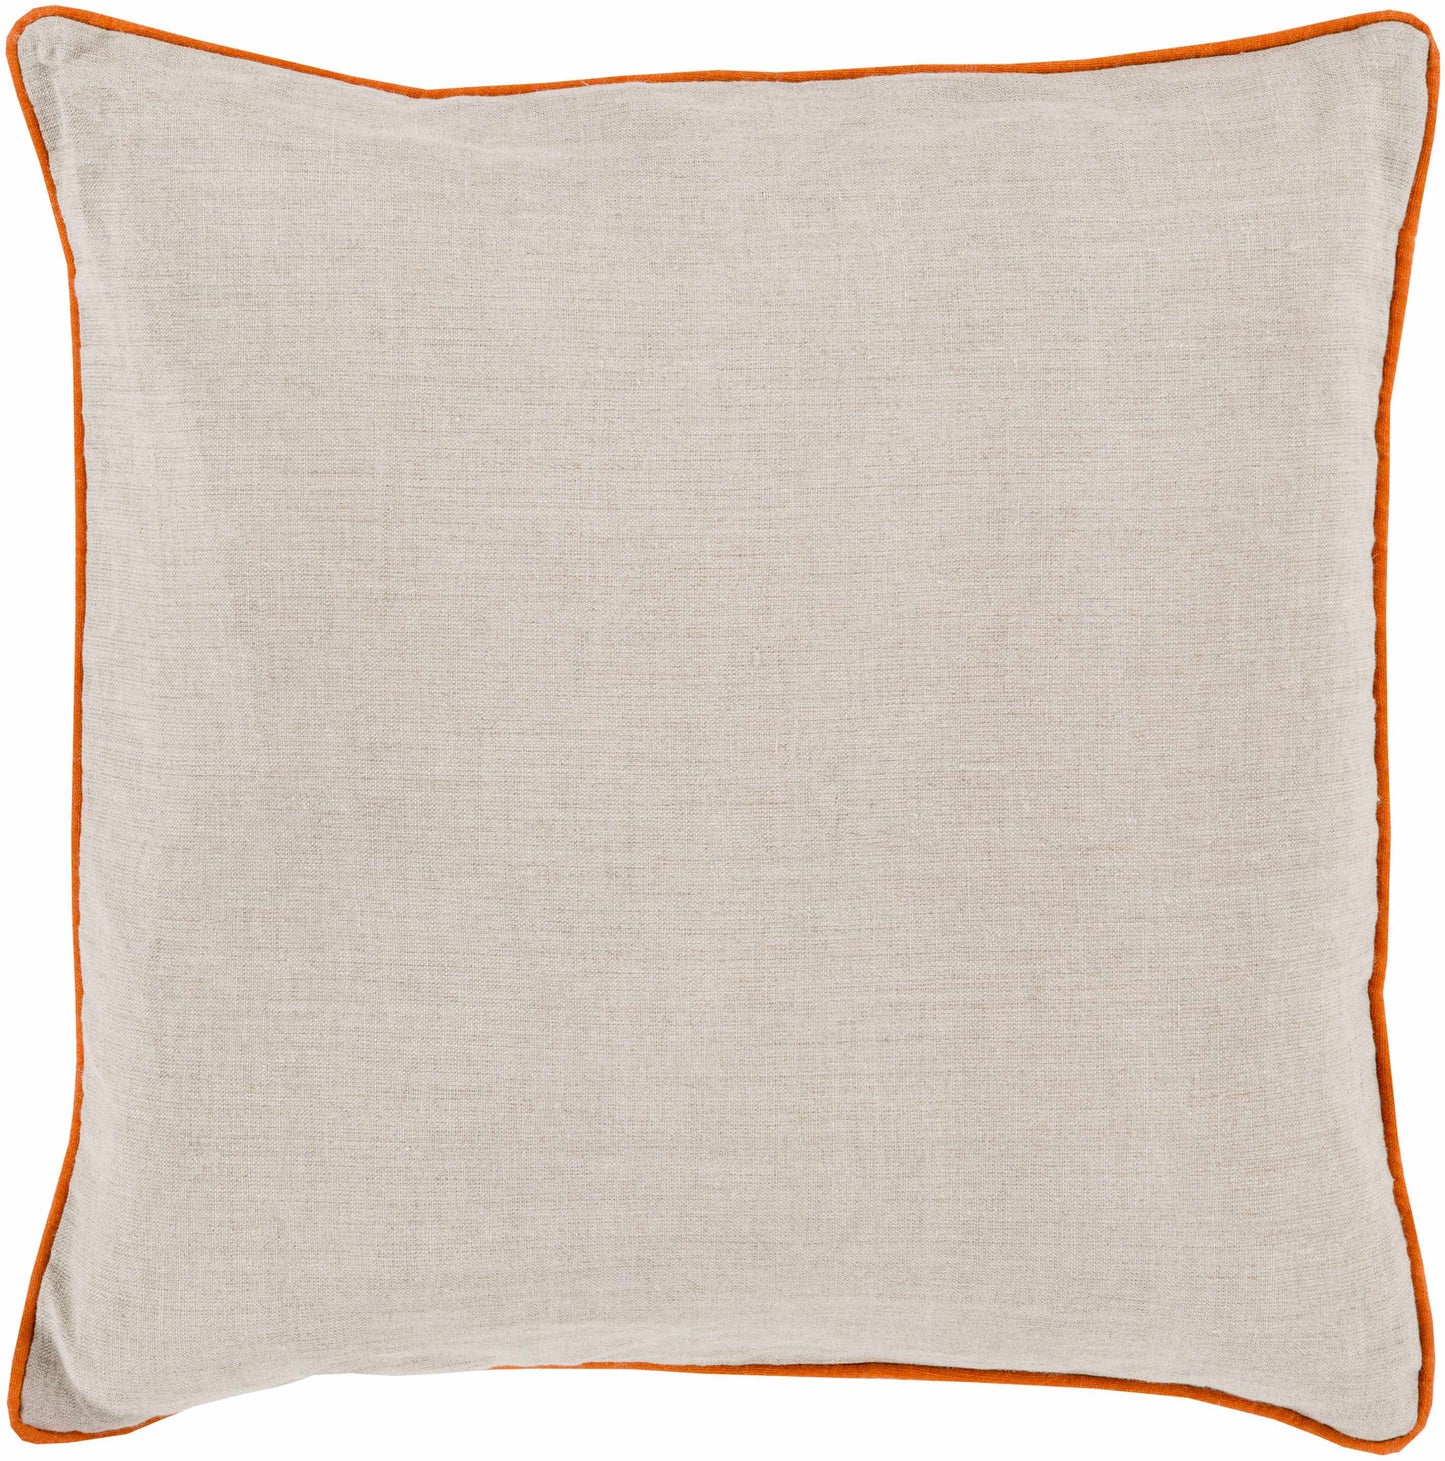 Hoenkoop Bright Orange Pillow Cover